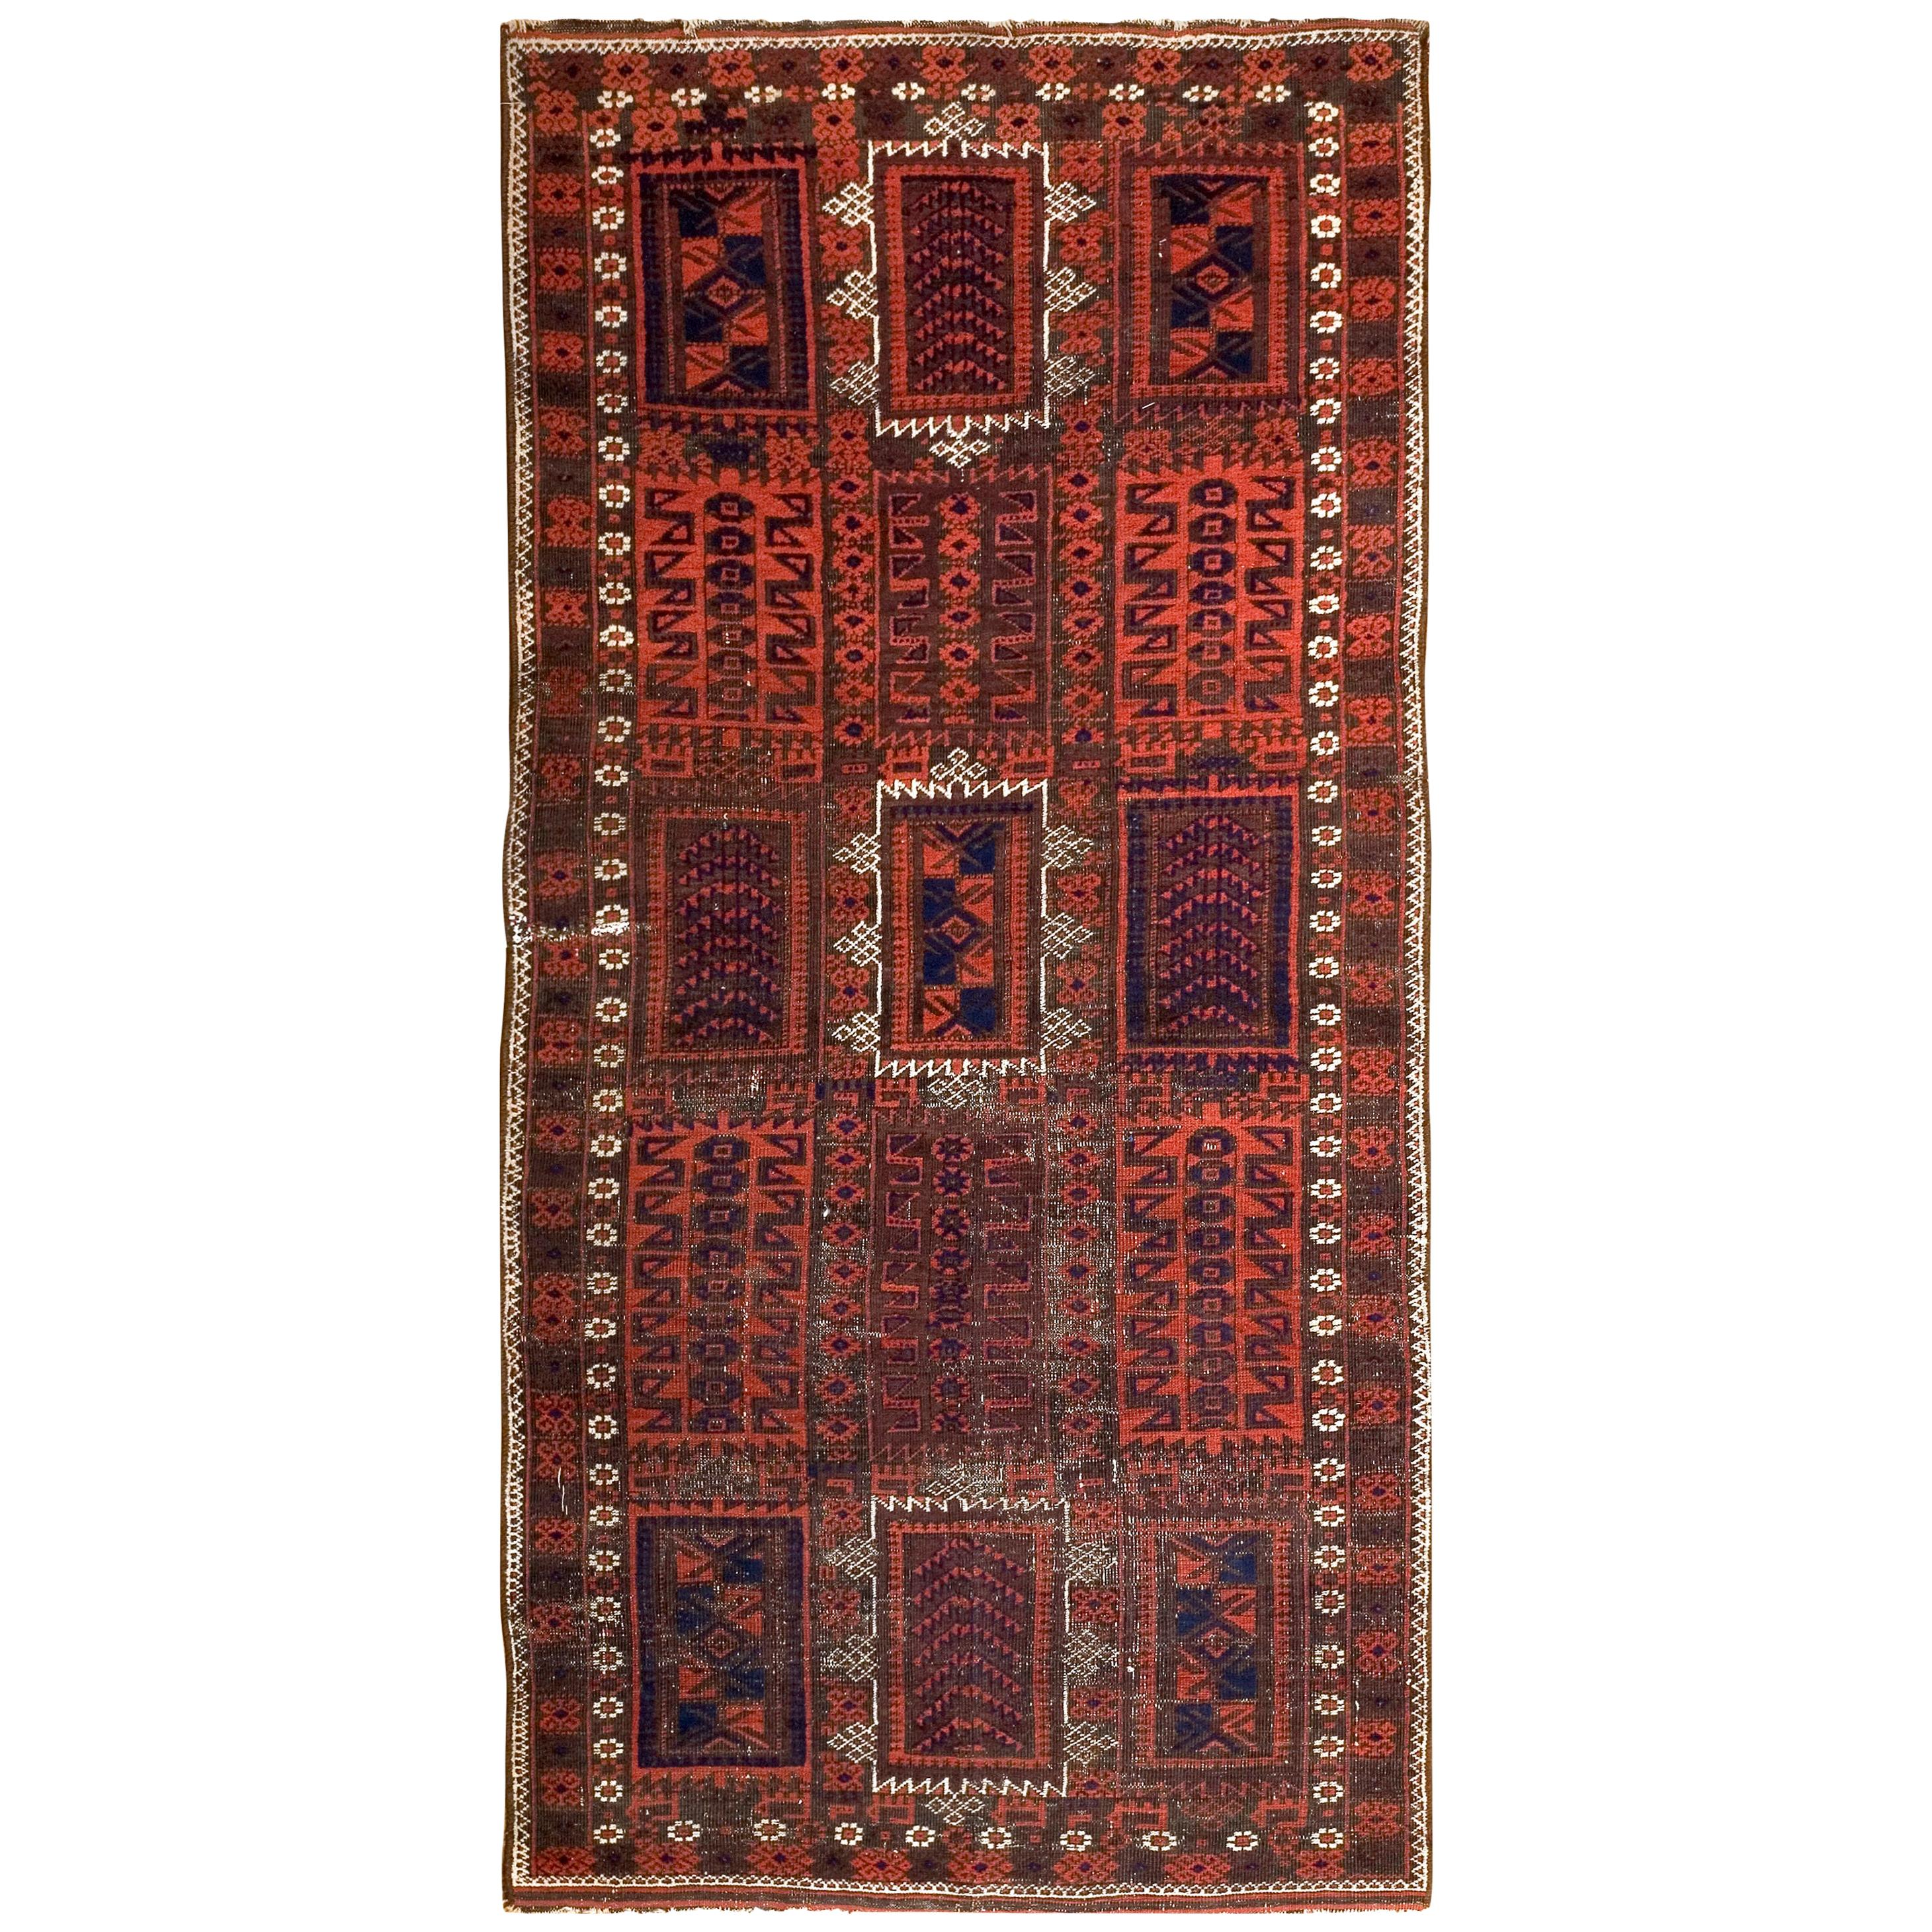 Tapis antique Baluch-Turkmen